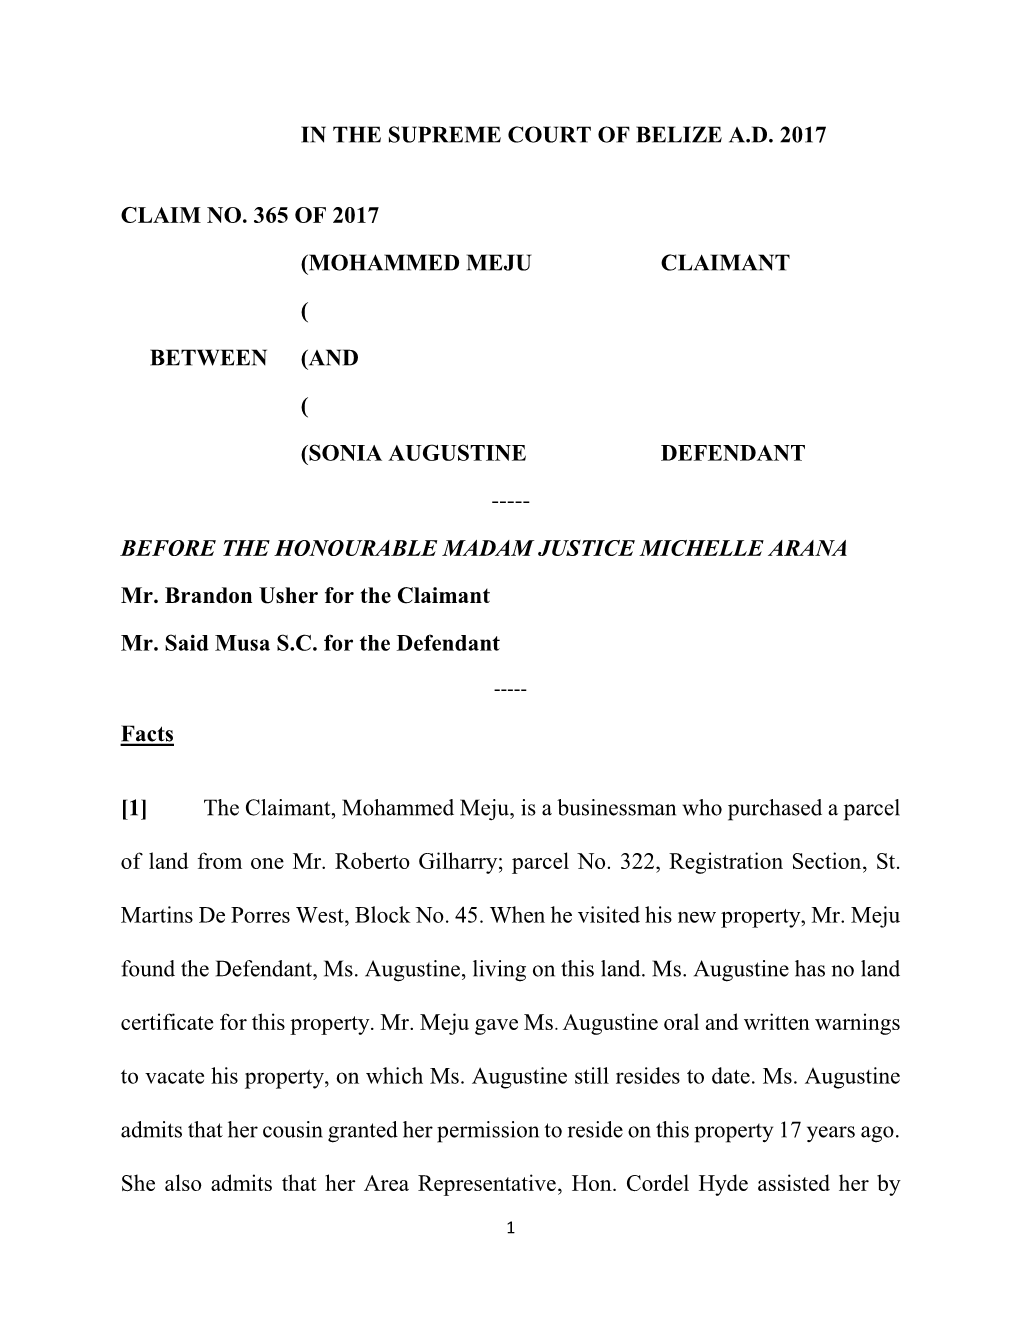 Supreme Court Claim No. 365 of 2017 – Mohammed Meju V Sonia Augustine